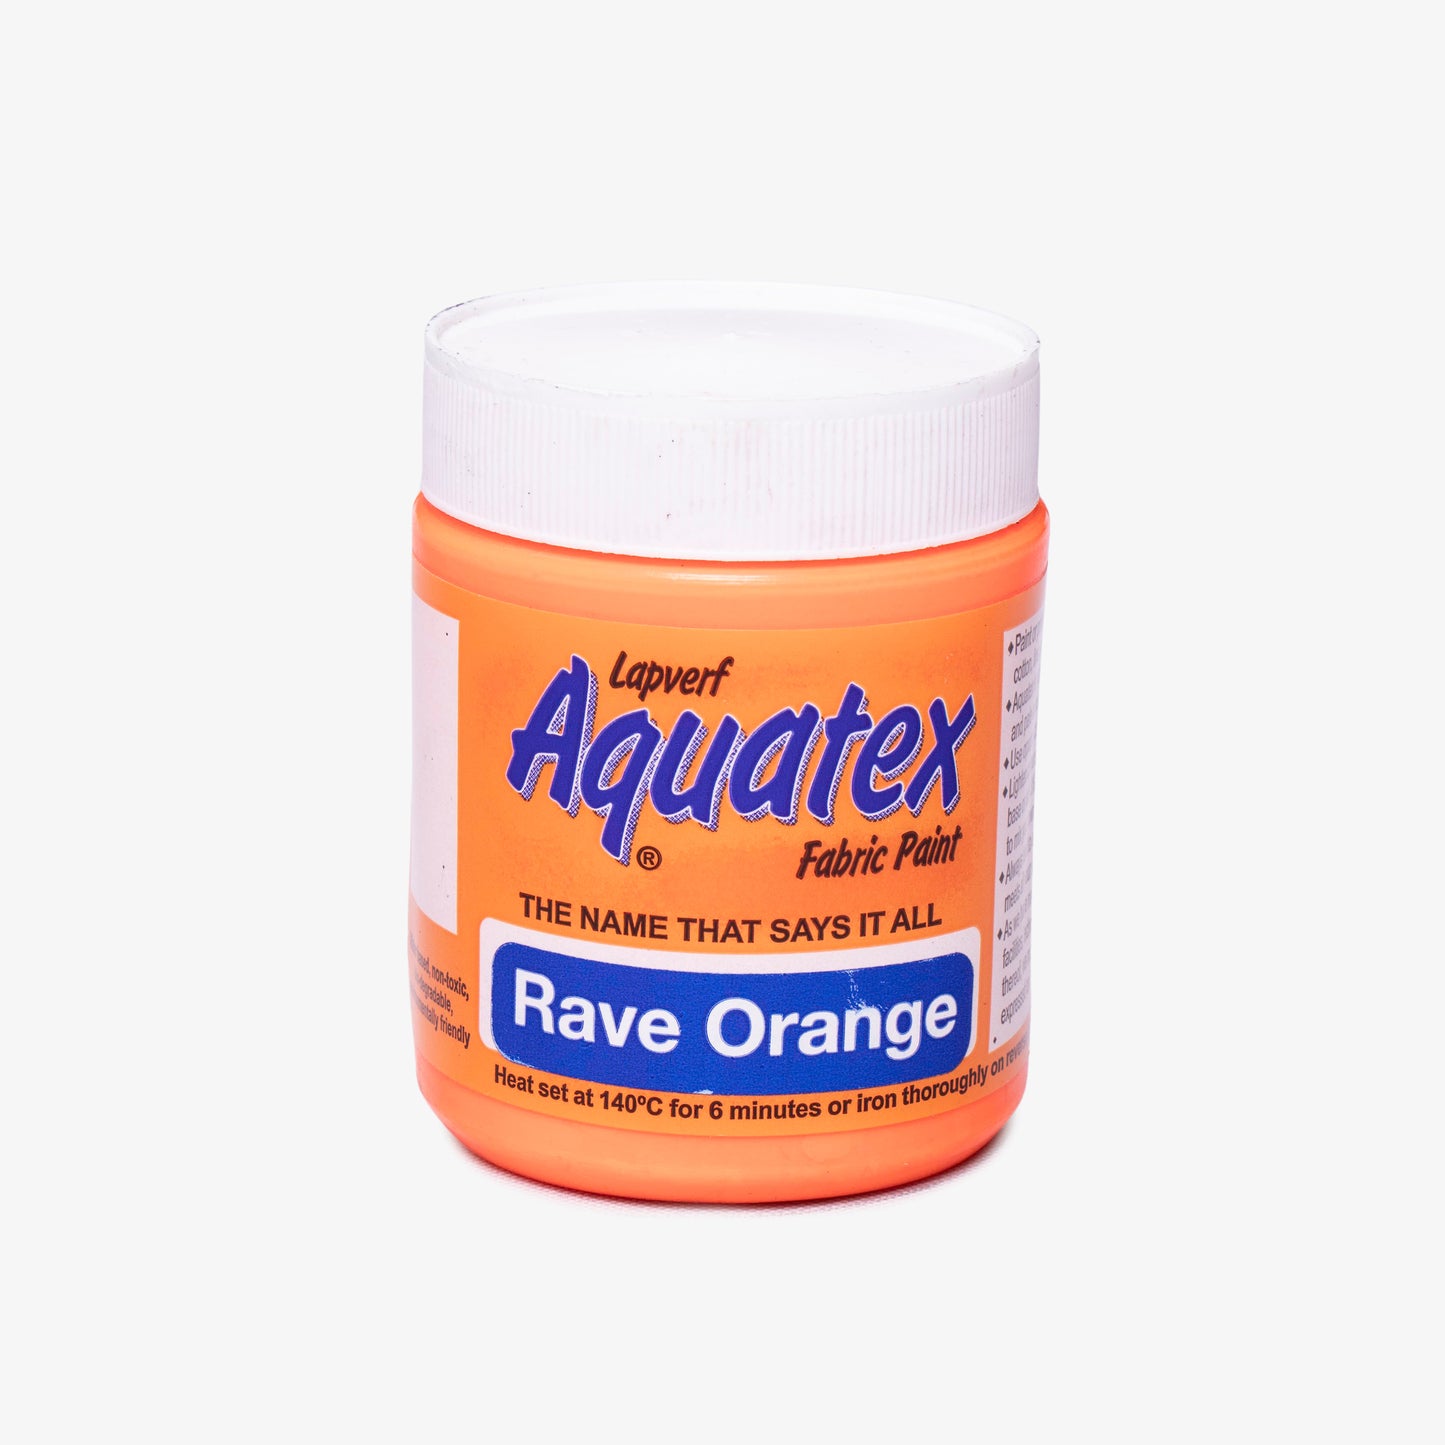 Fabric Paint Rave Orange 100g